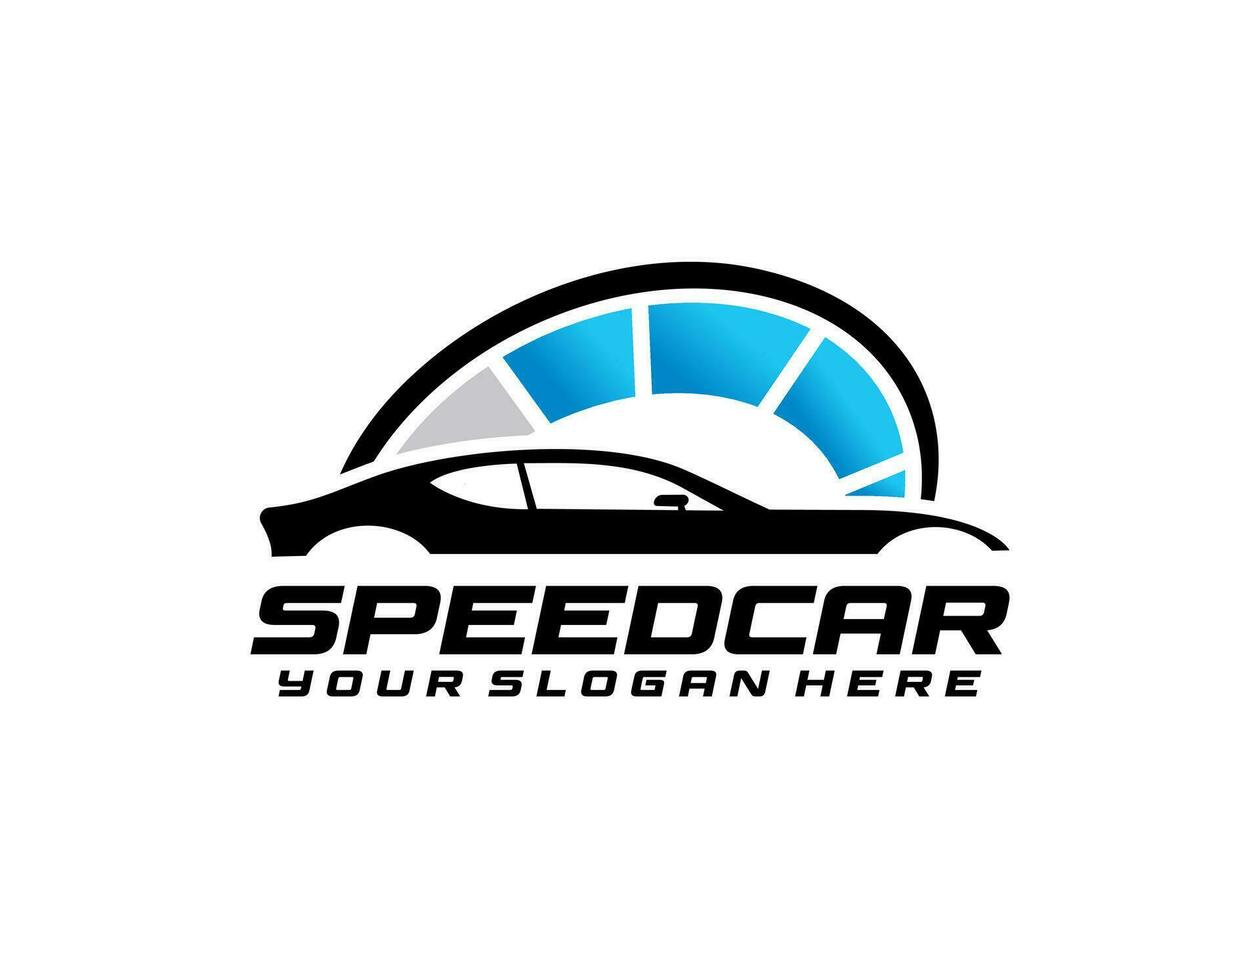 Car, auto, automotive logo template vector